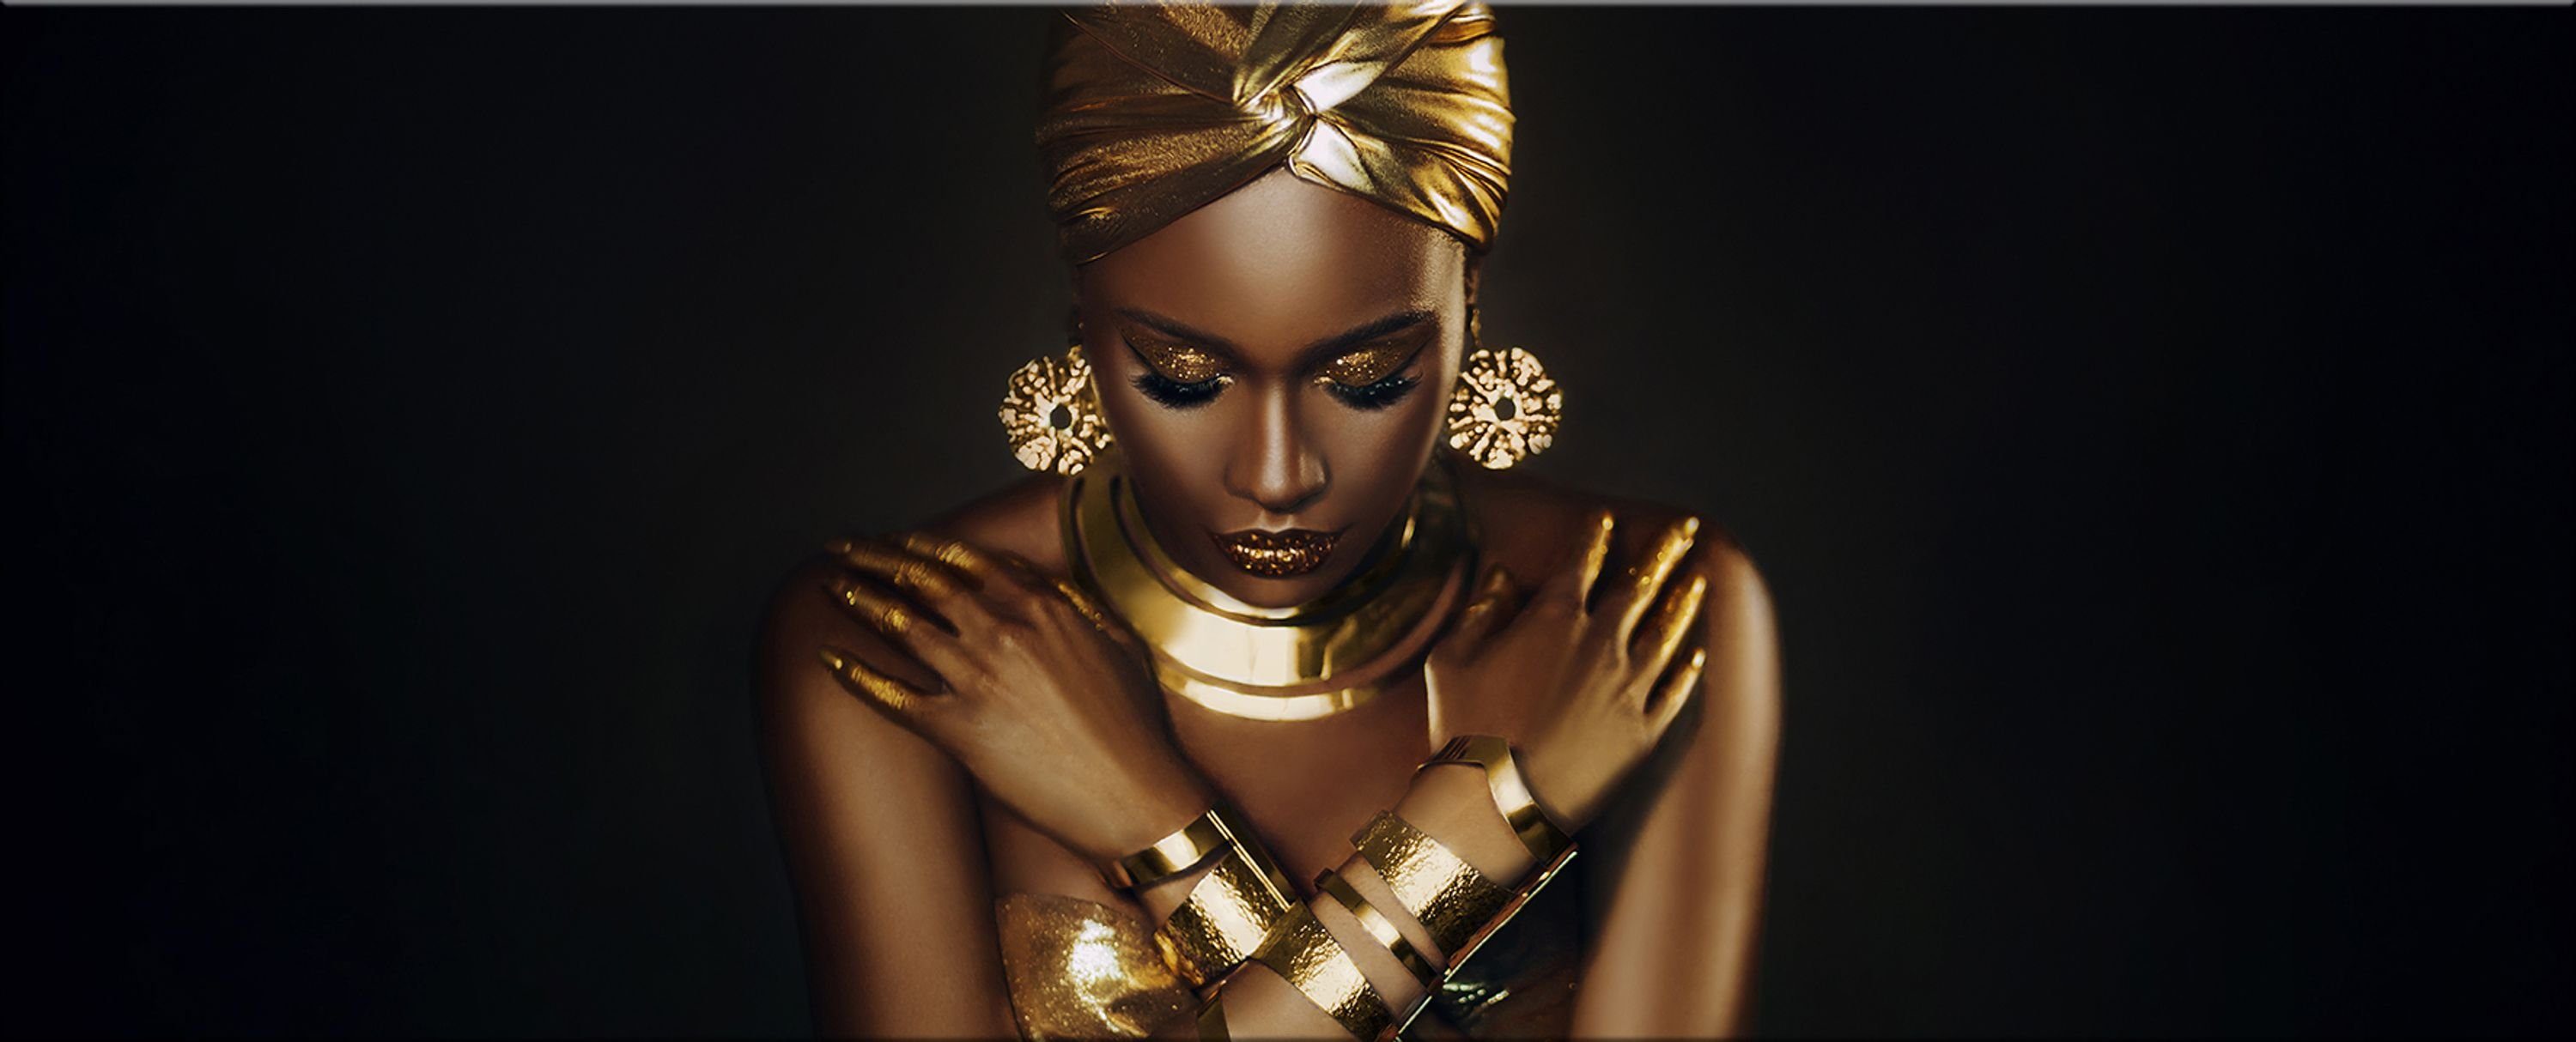 artissimo Glasbild Glasbild XXL 125x50 cm Bild aus Glas Wandbild groß Frau  schwarz gold, Fashion & Frauen: Afrikanische Frau